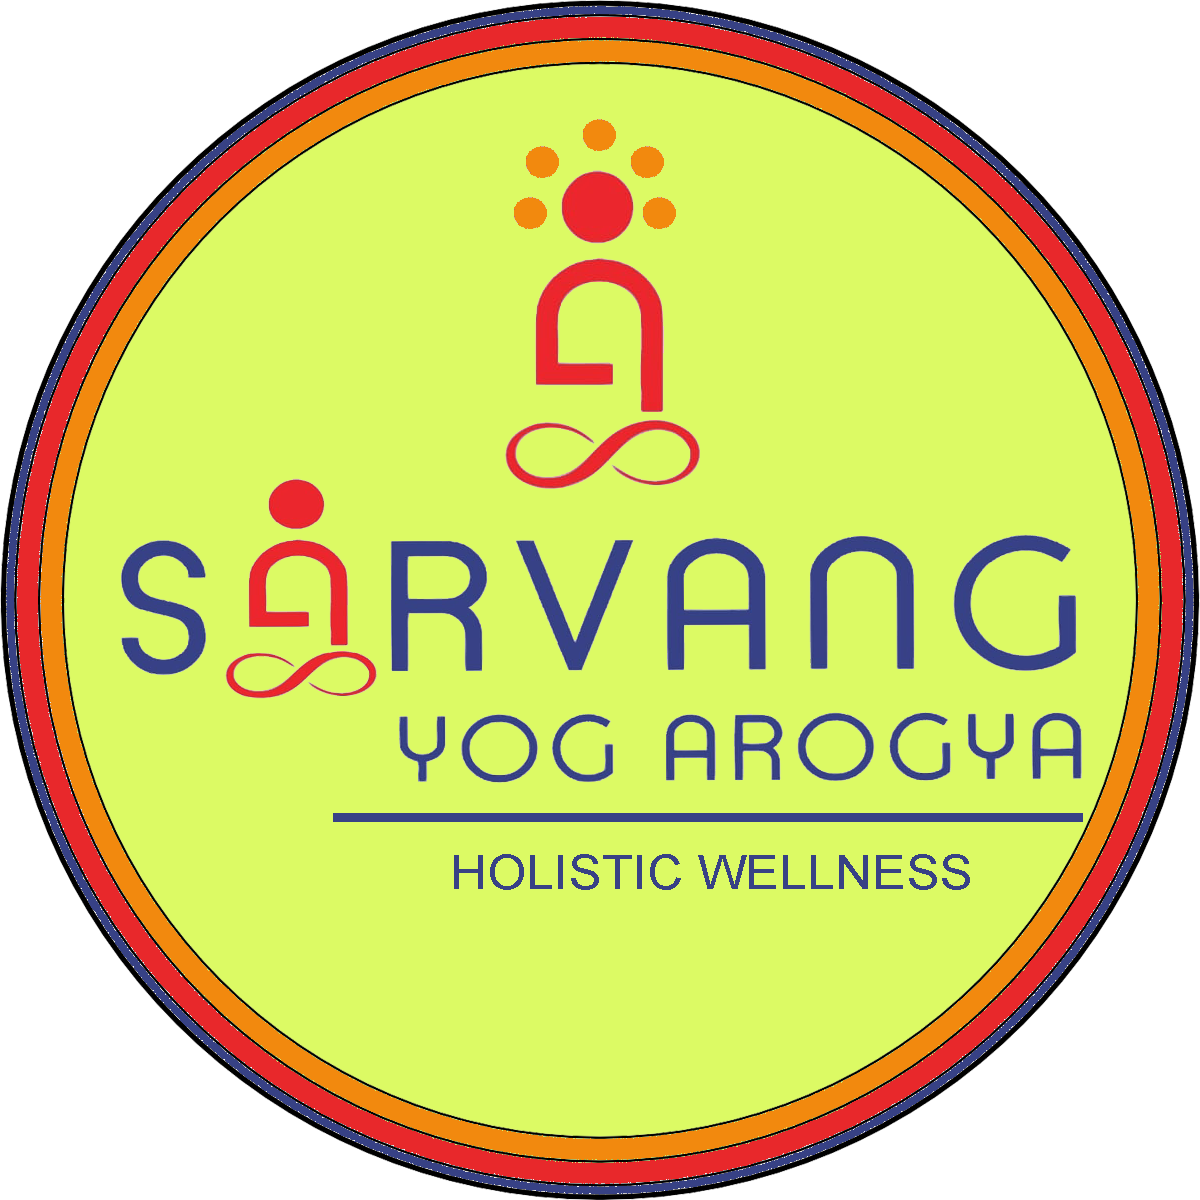 Sarvang Yog Arogya kendra, Lucknow, Uttar Pradesh